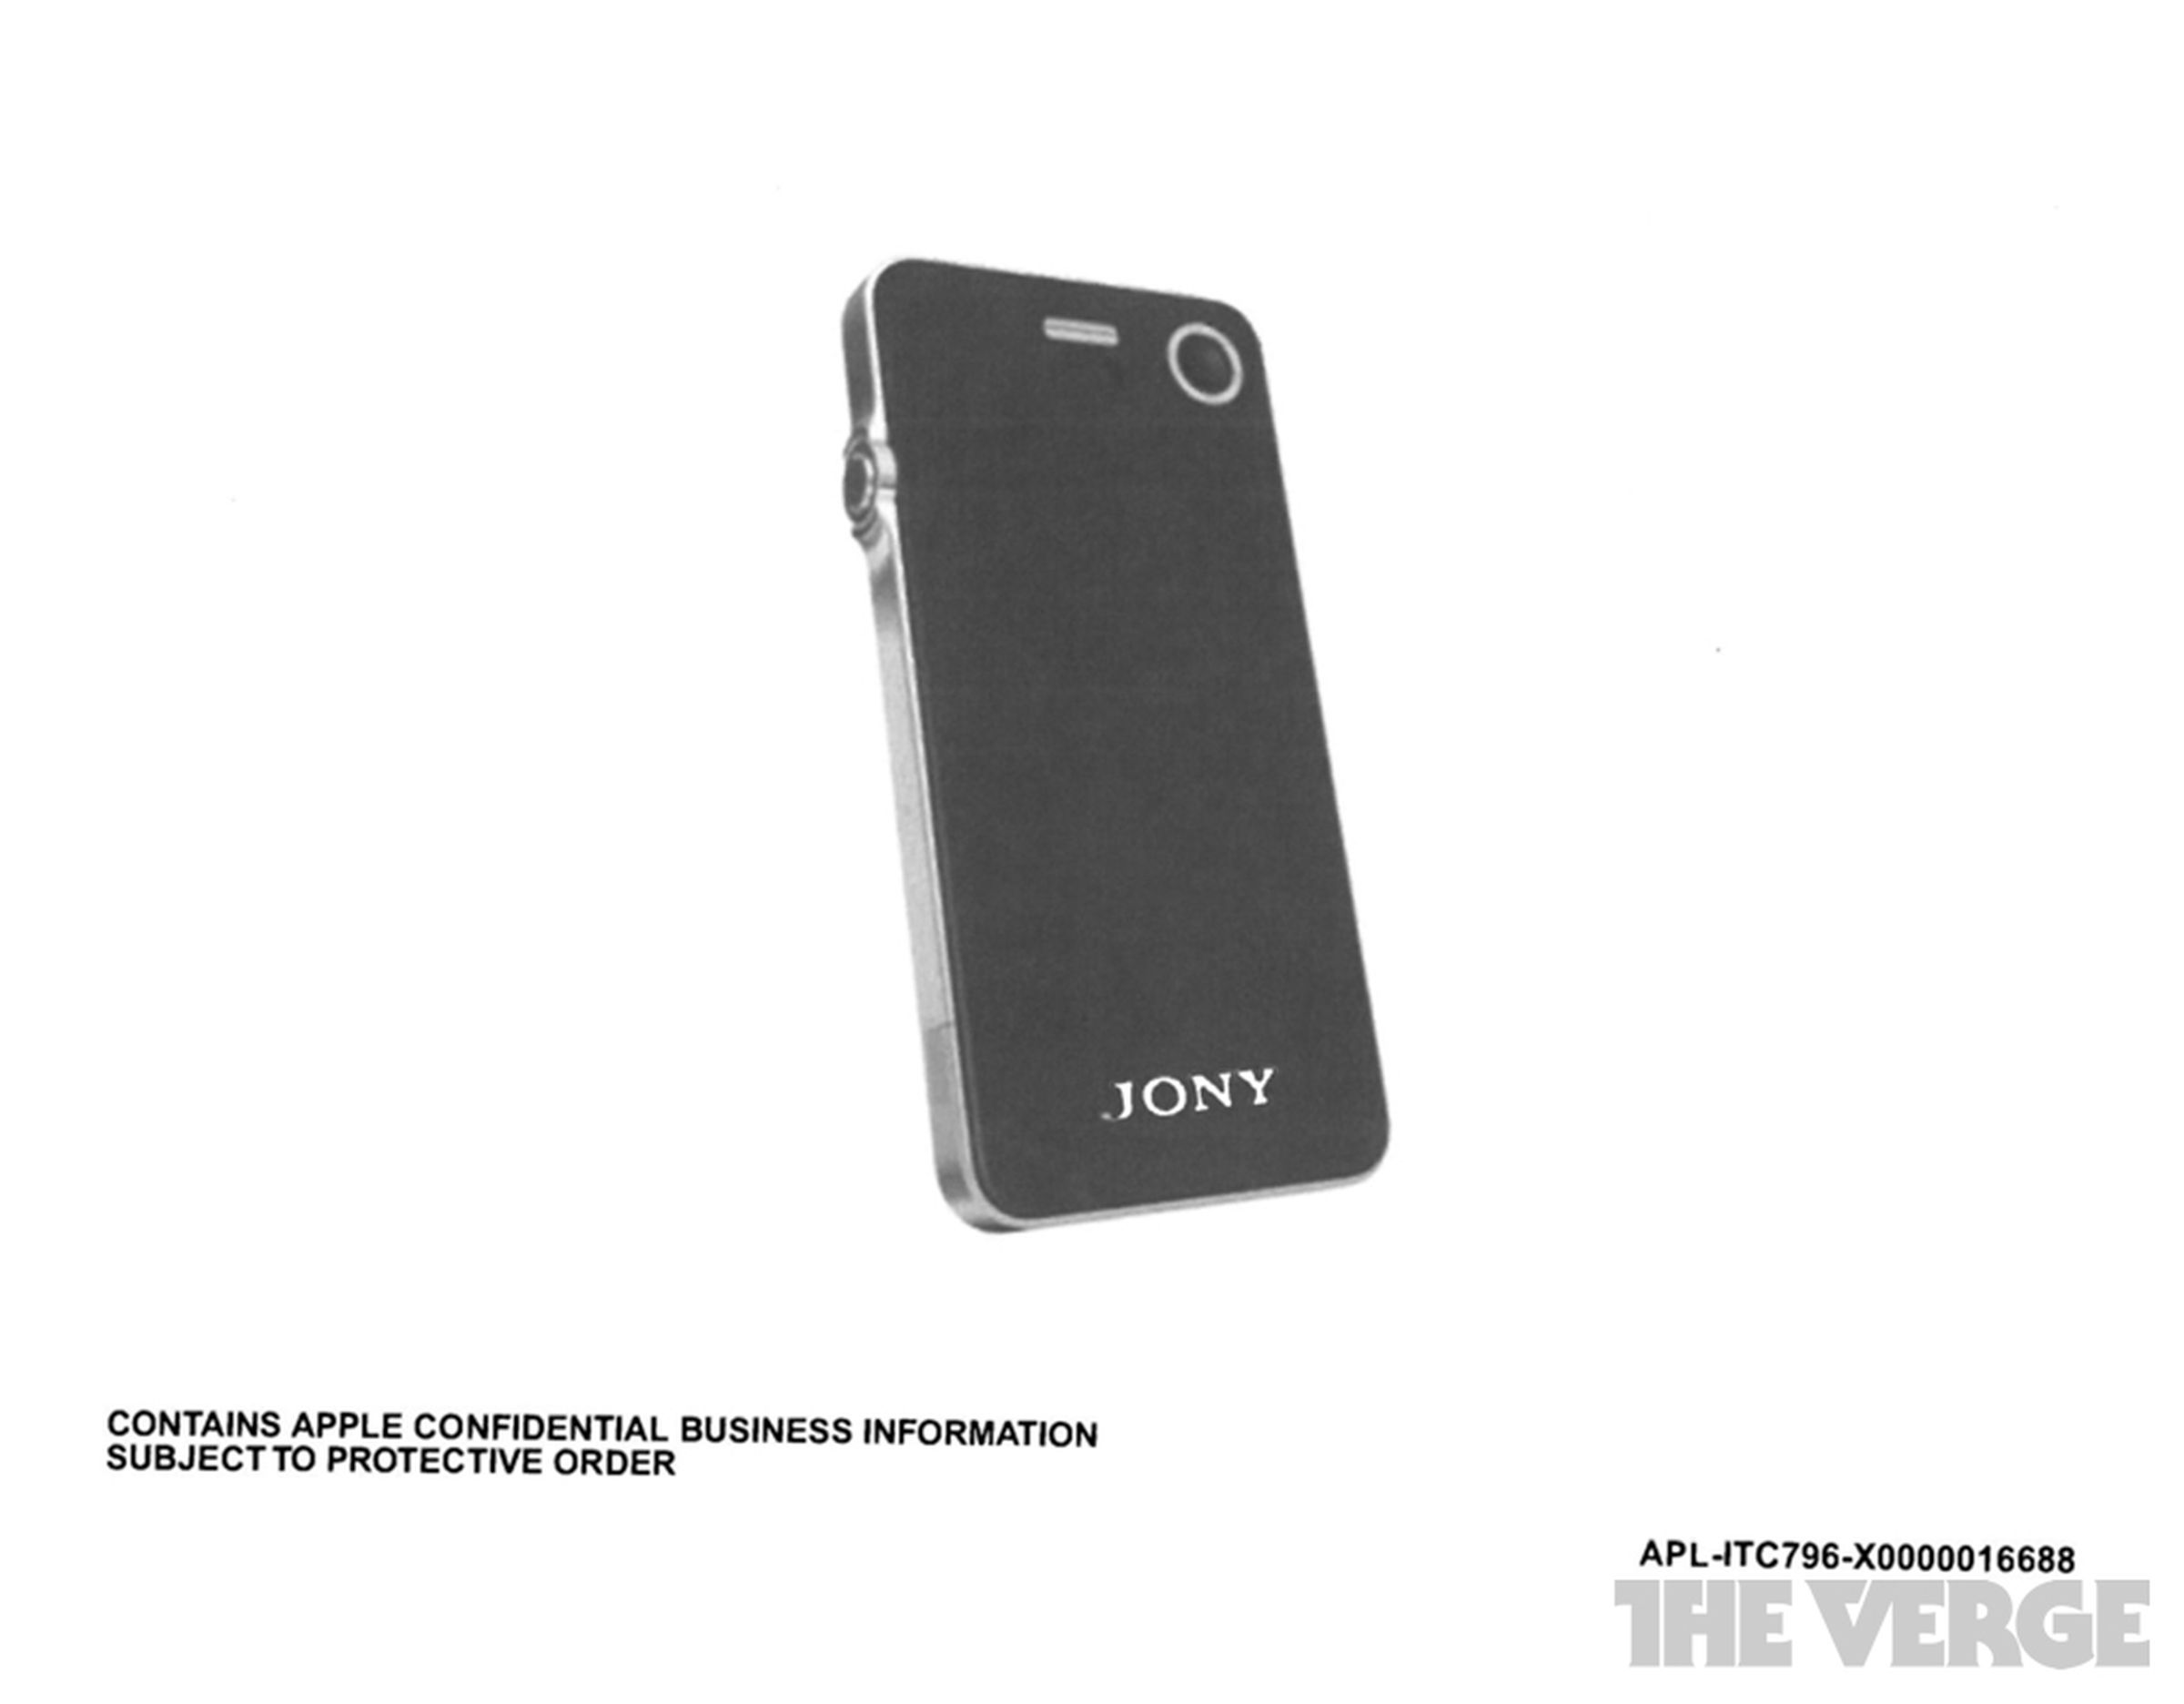 Sony-inspired iPhone design renders